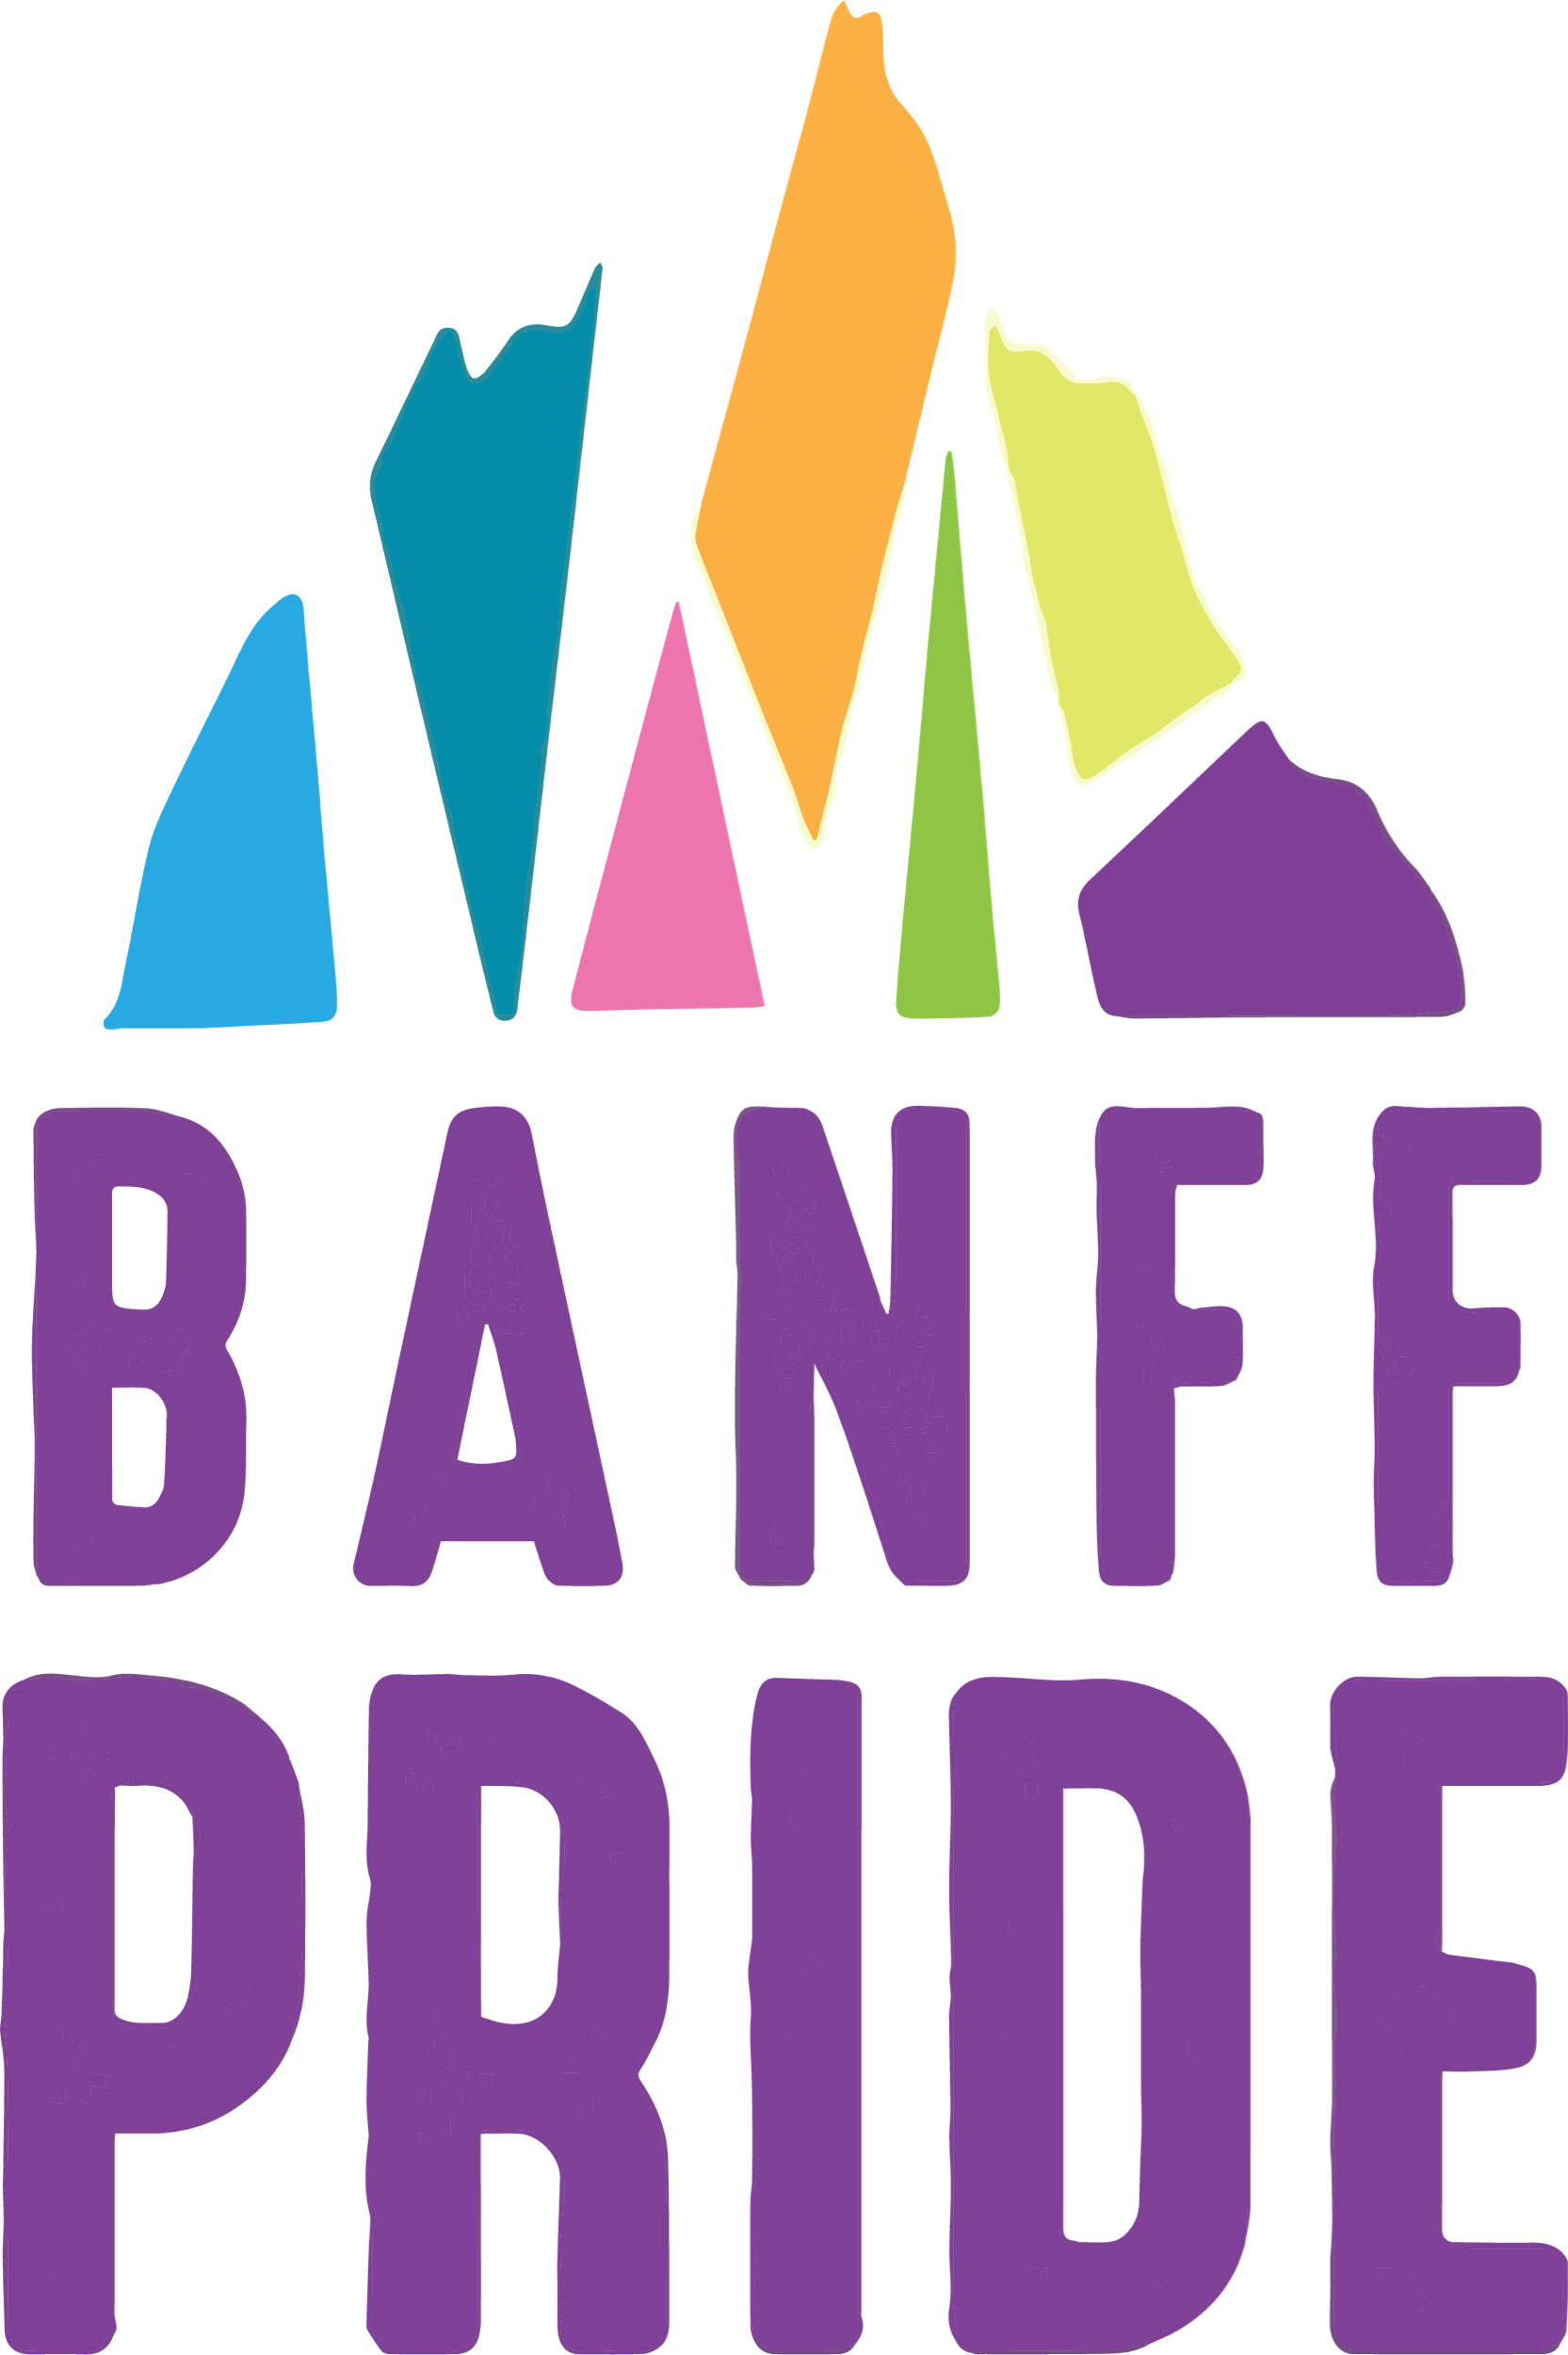 Banff Pride